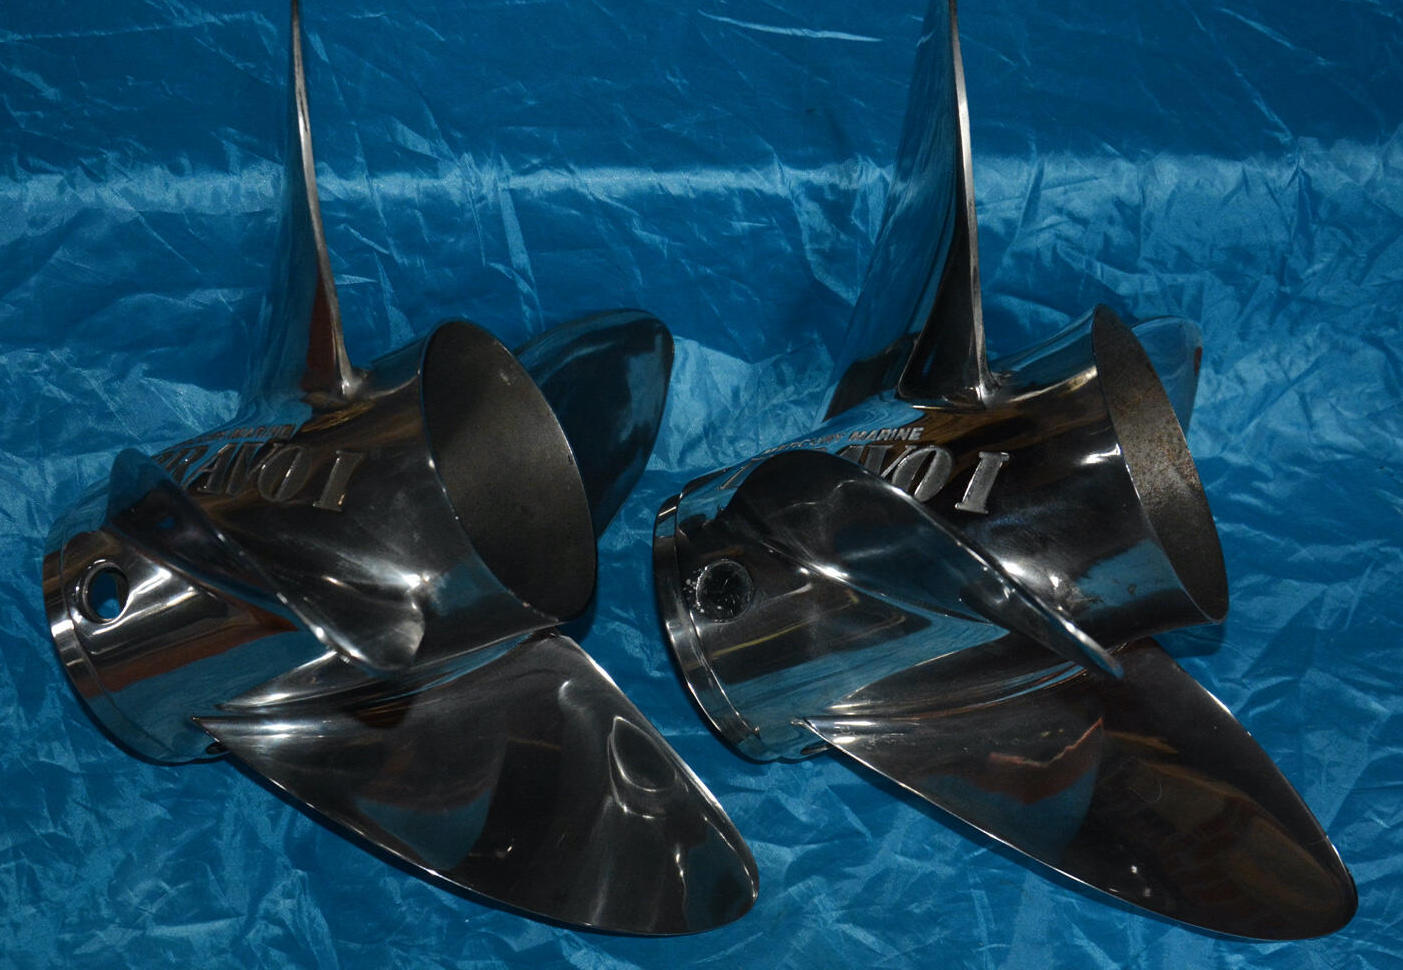 Stainless-steel propeller, Bravo One prop, high-performance prop